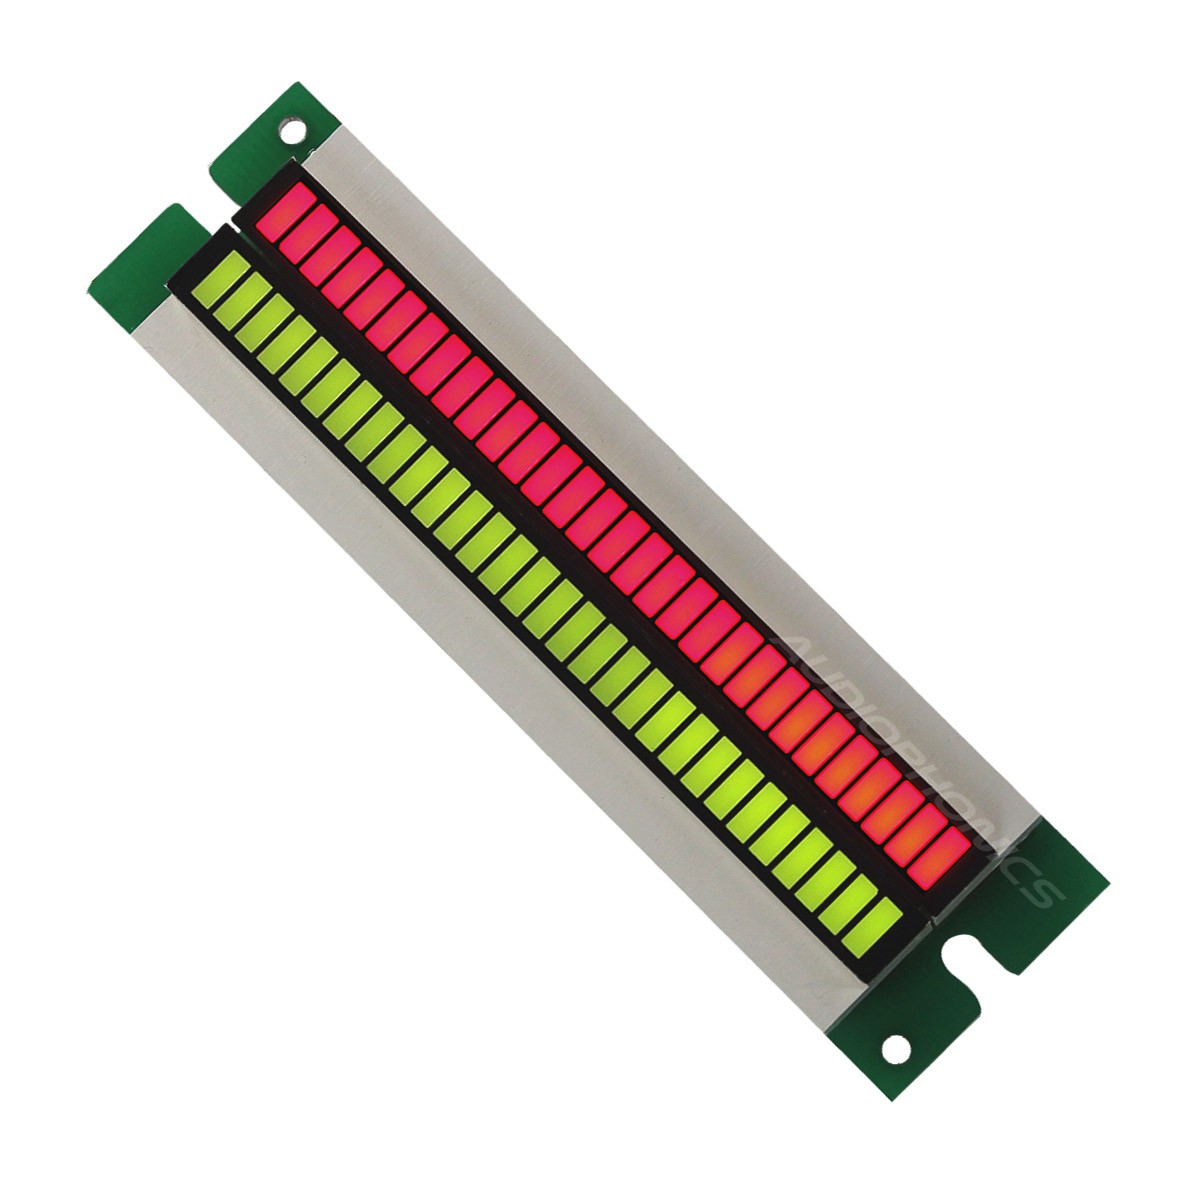 LED Barmeter Dual Column for Input Voltage Display